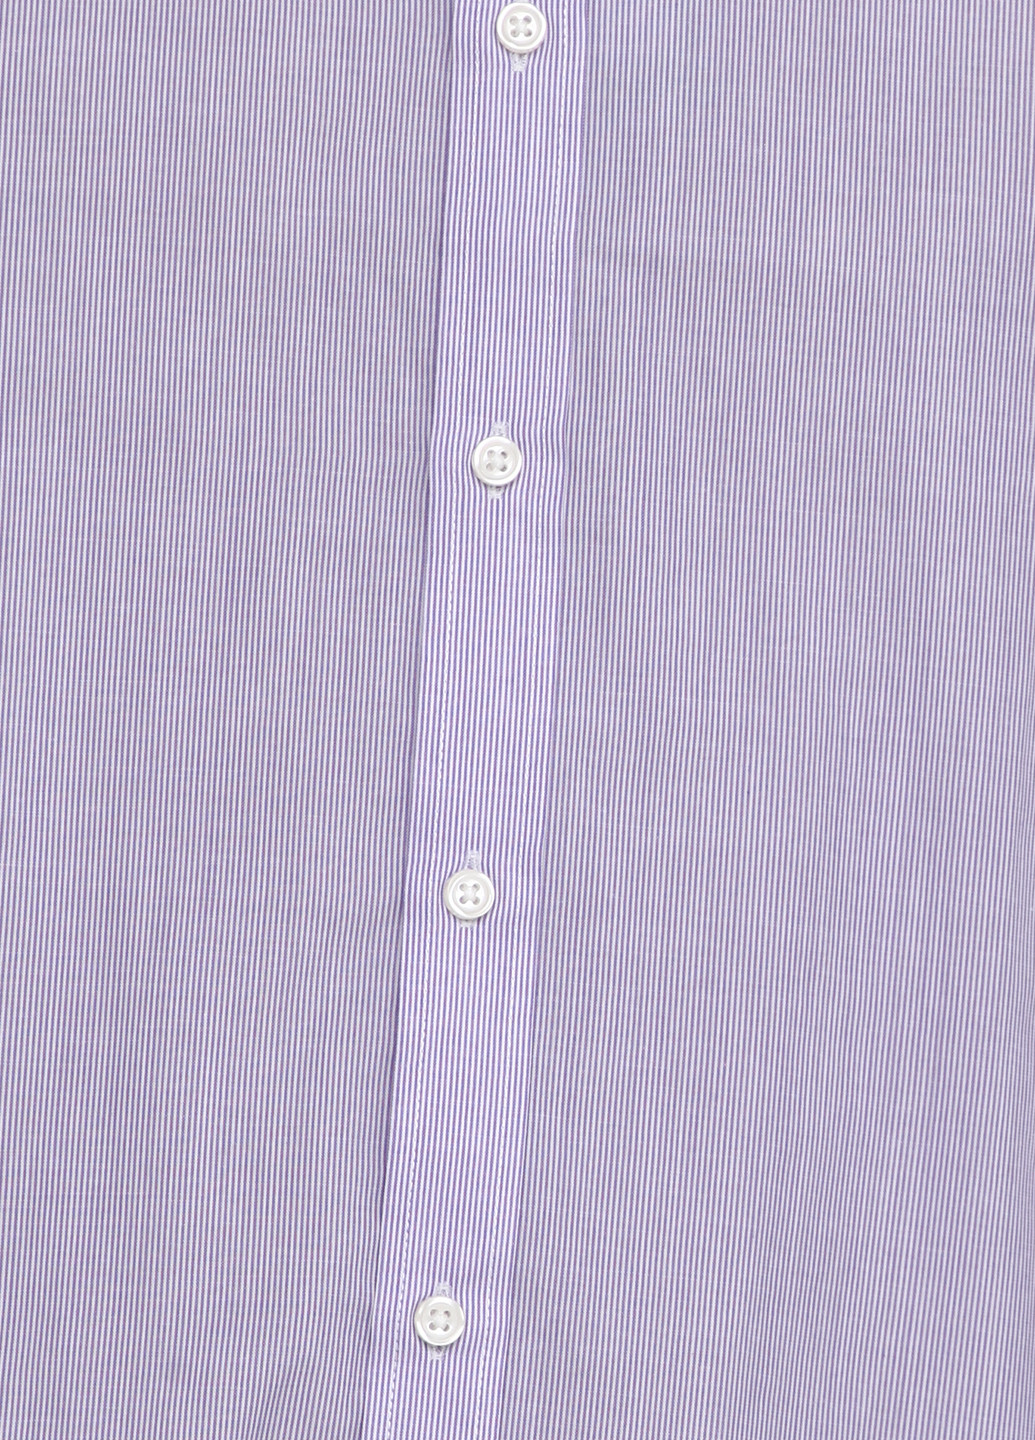 Сорочка George смужка фіолетова кежуал